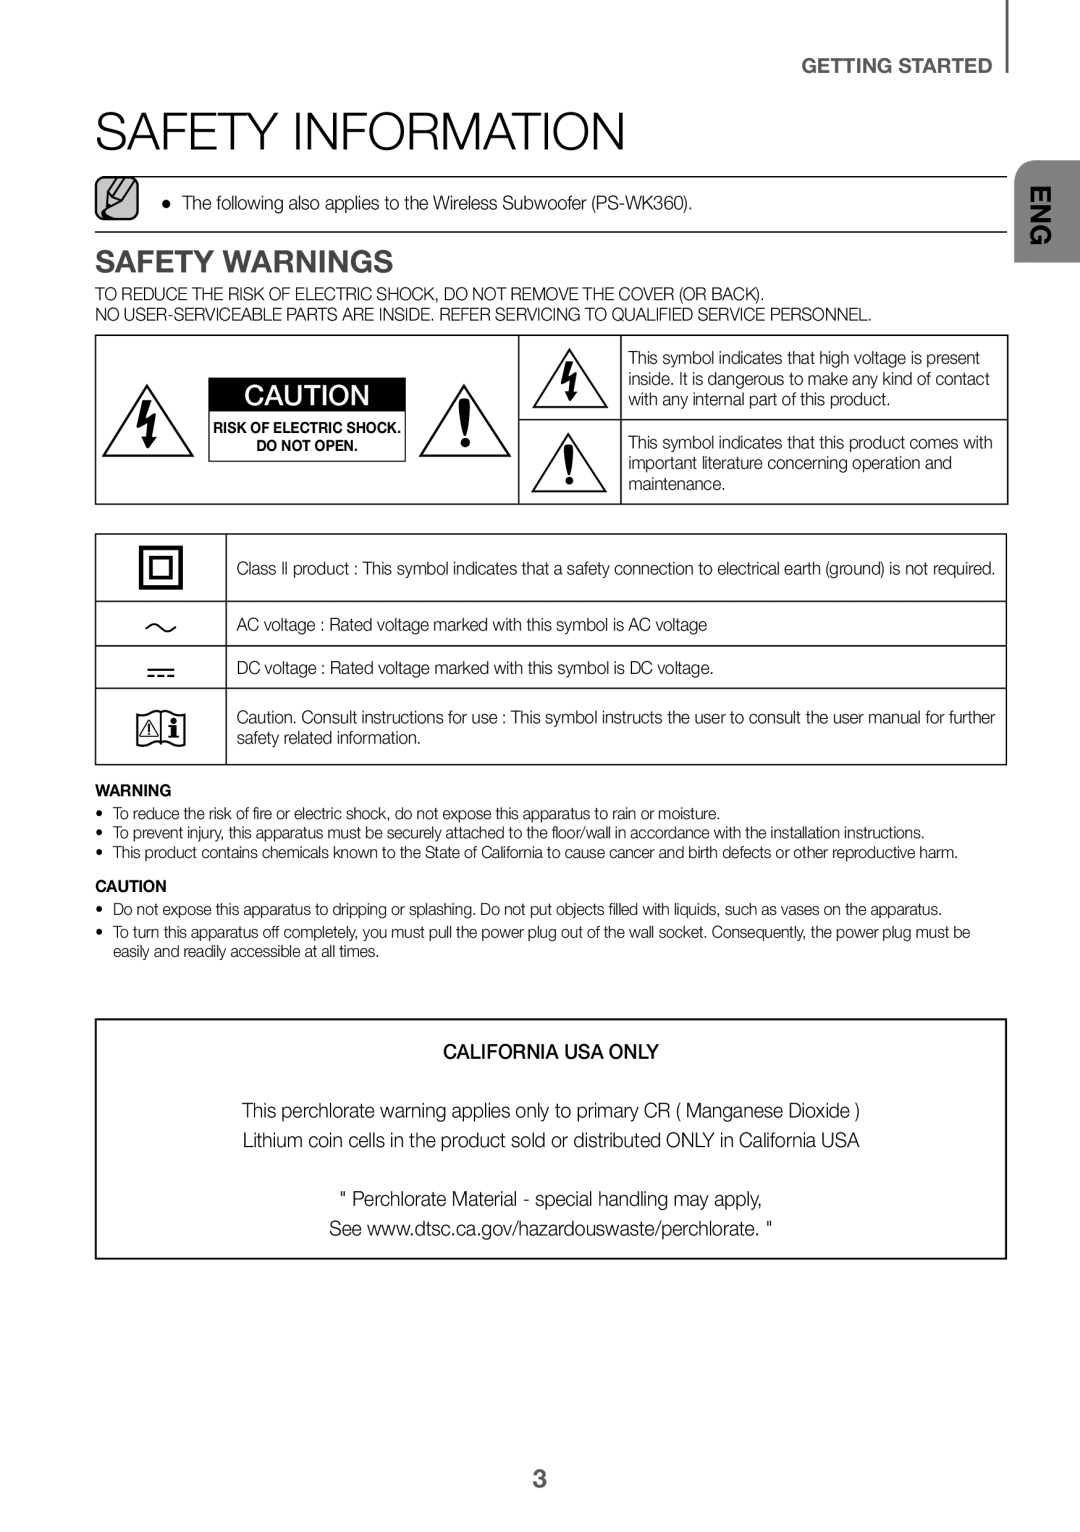 SAFETY WARNINGS Standard HW-K360